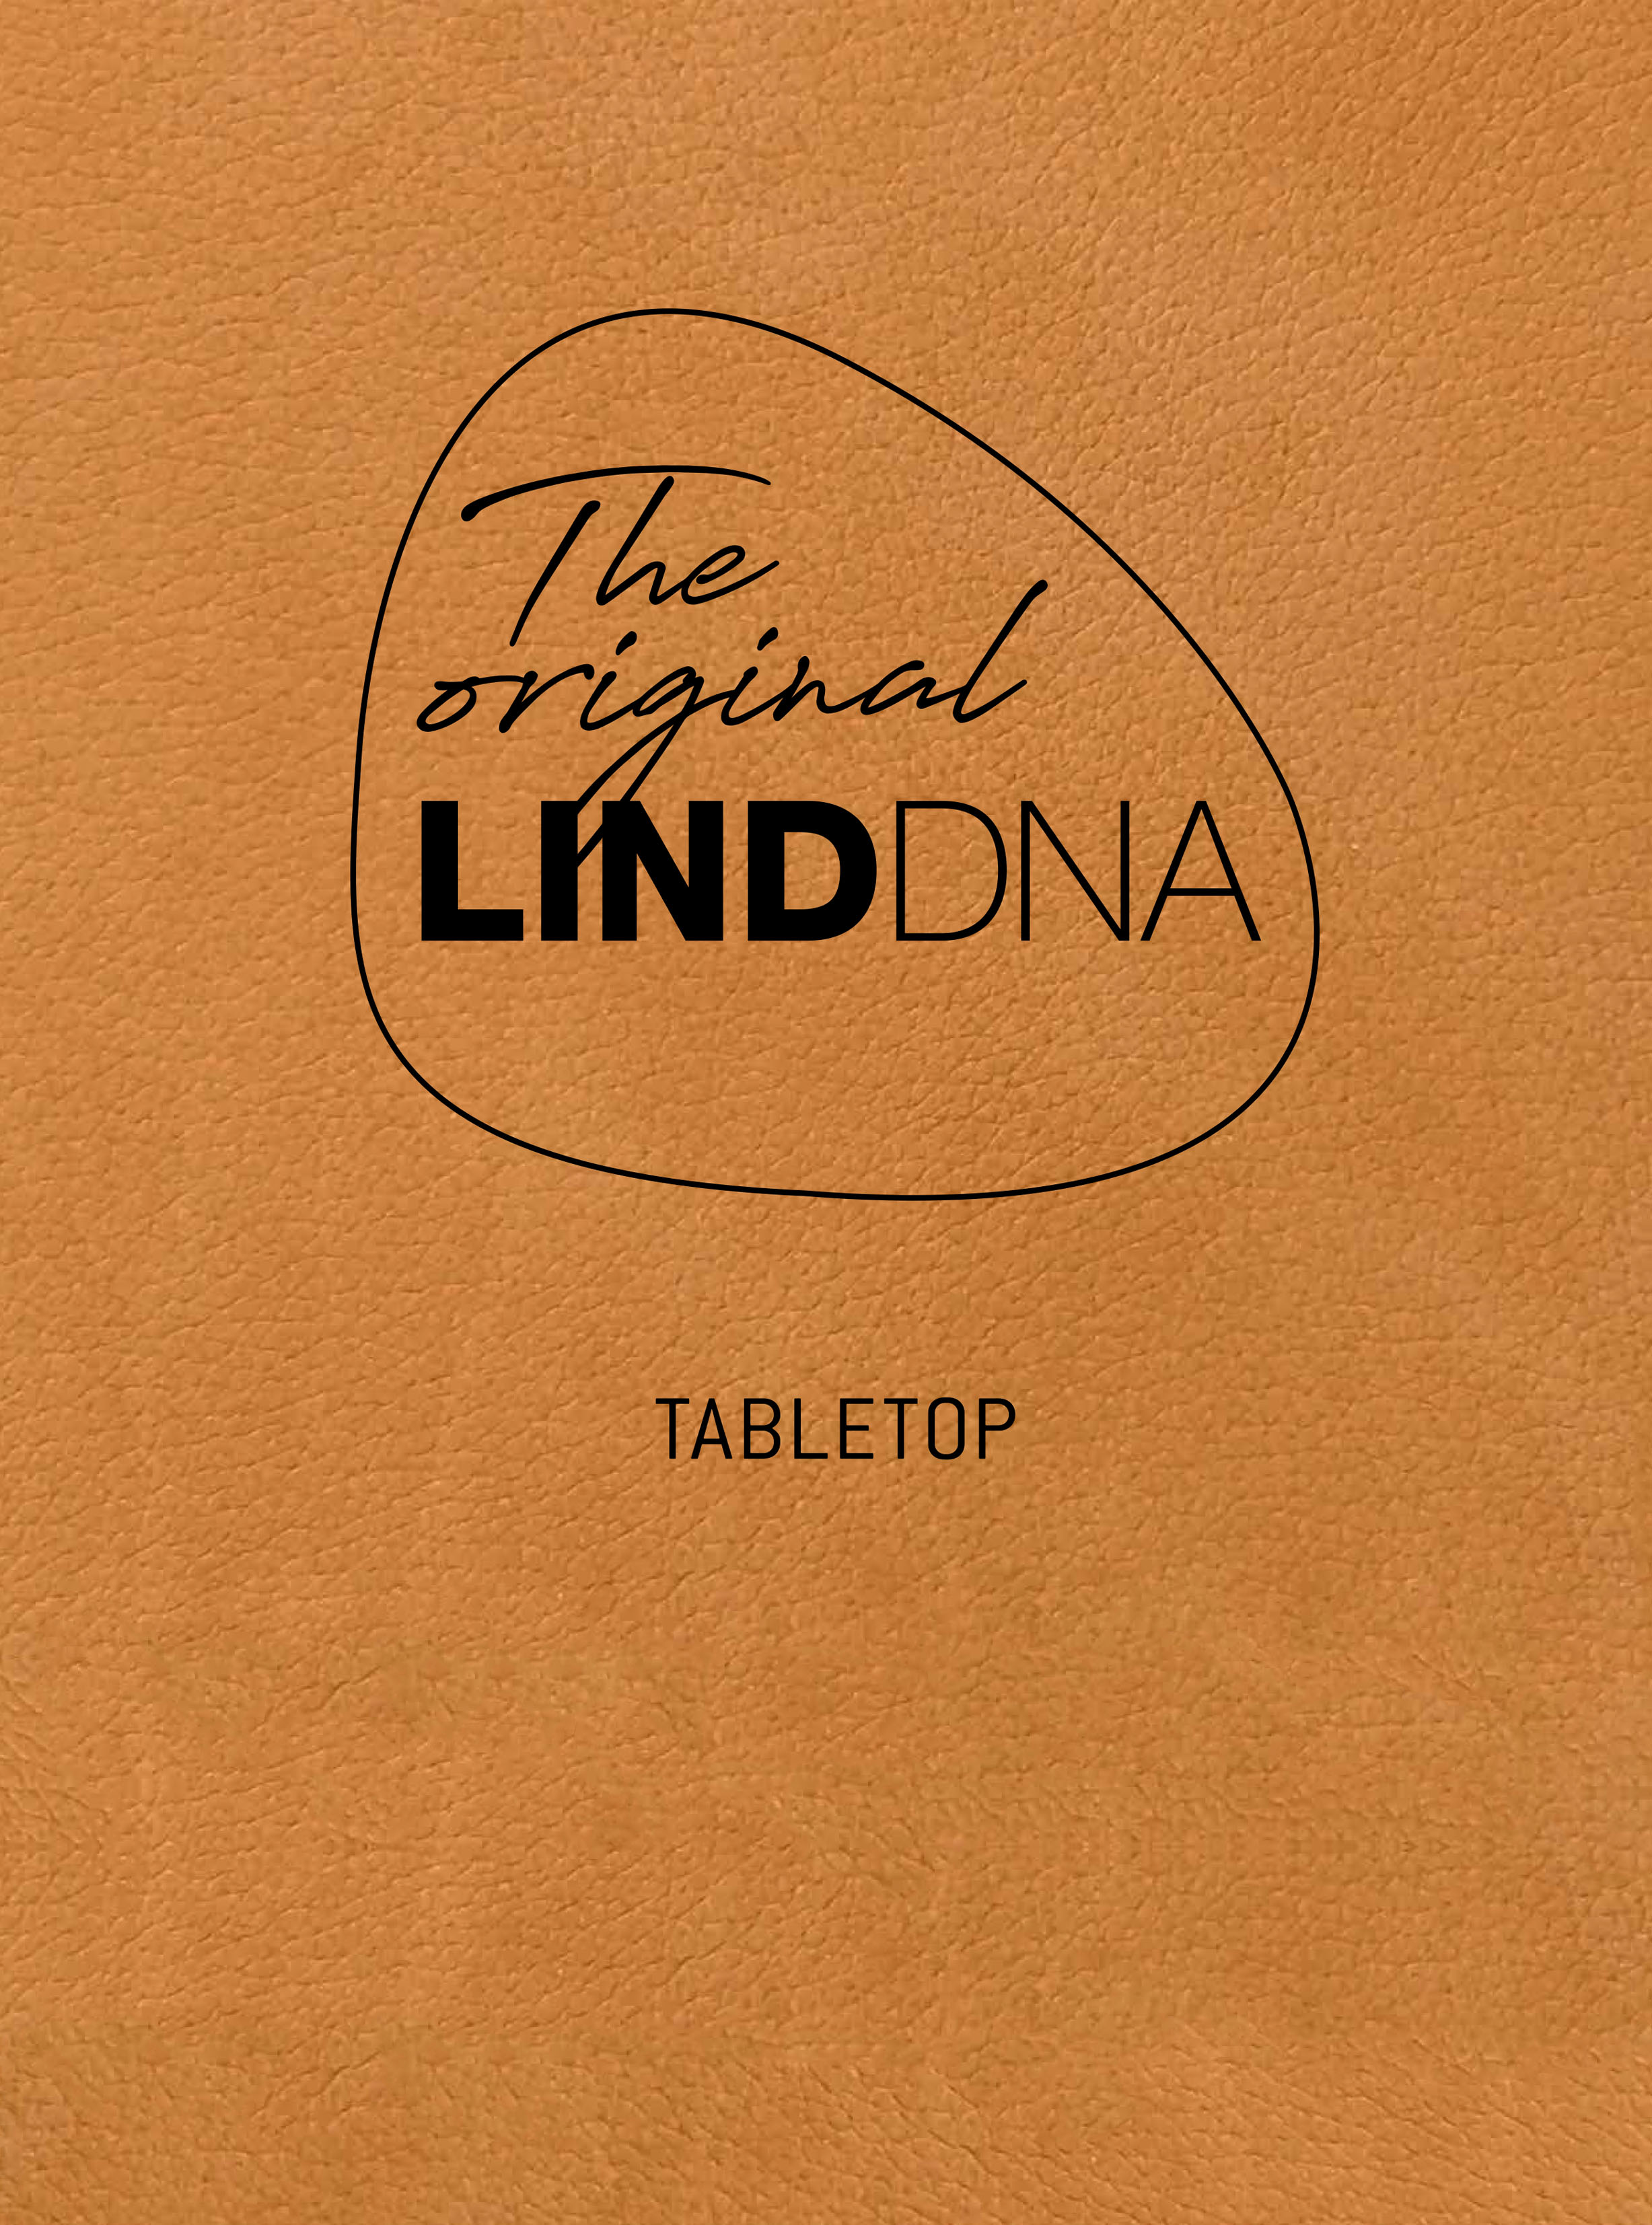 LindDNA Table Top Brochure 2019/2020